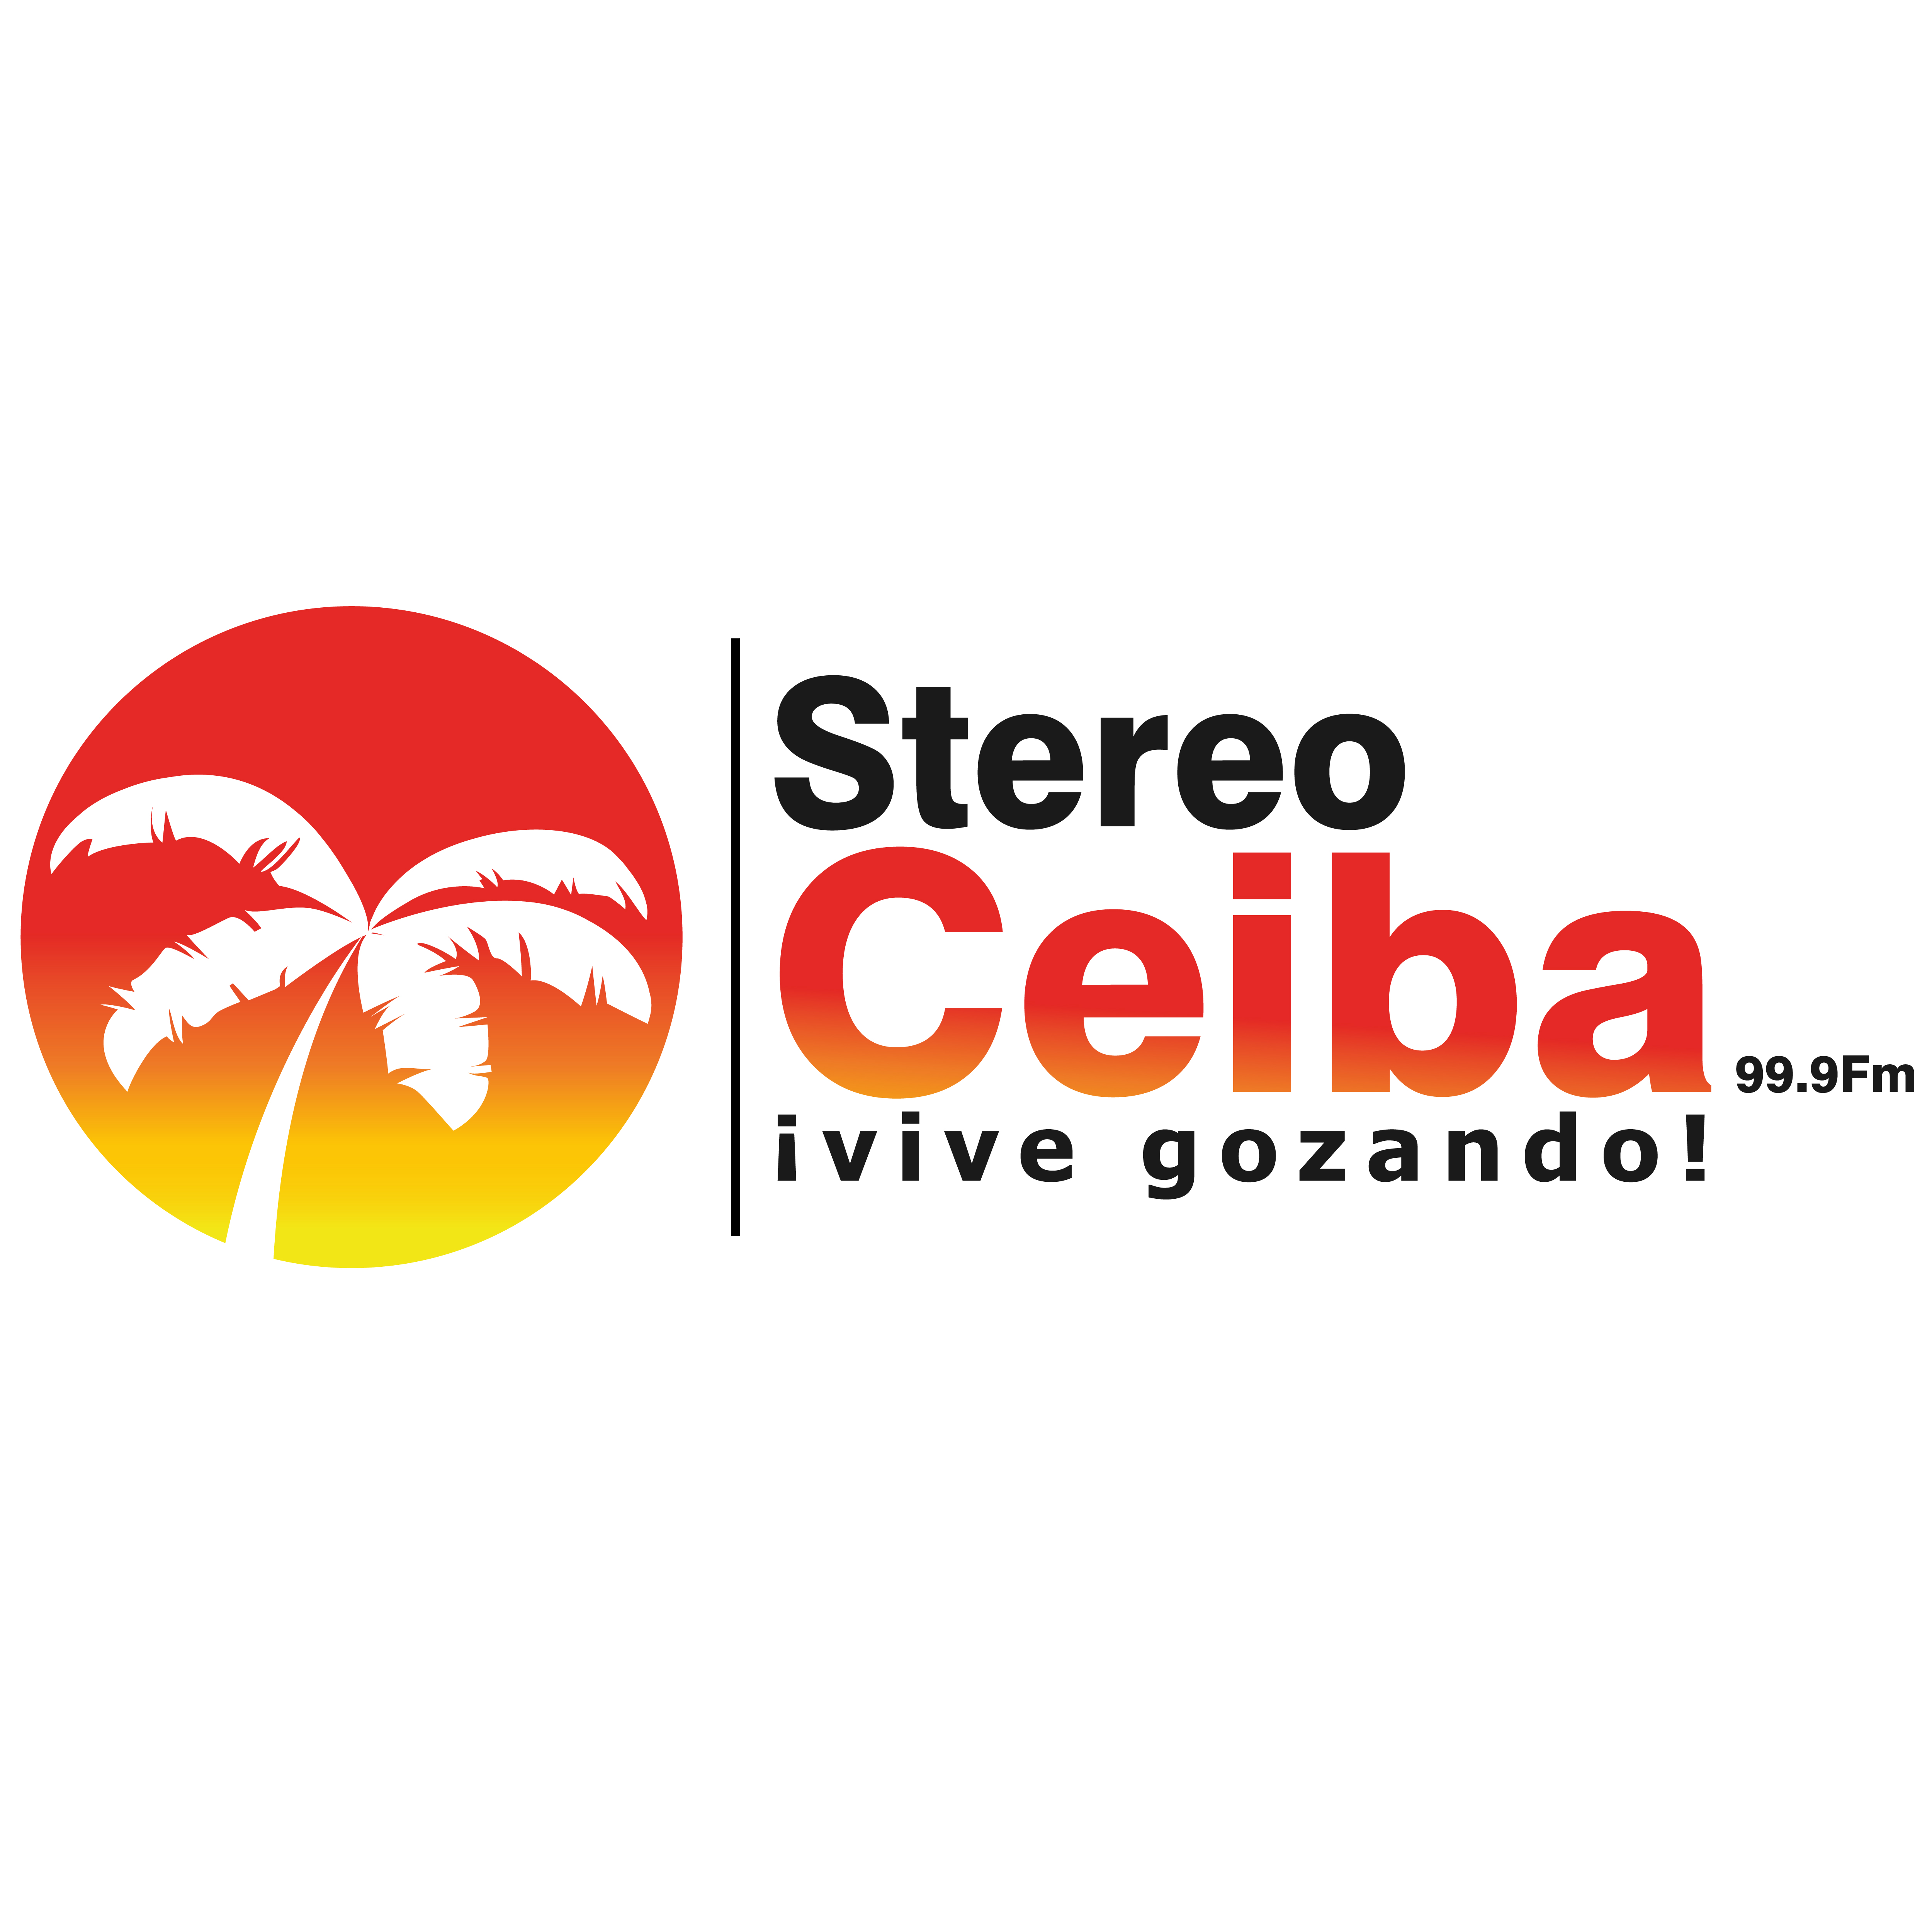 Stereo Ceiba